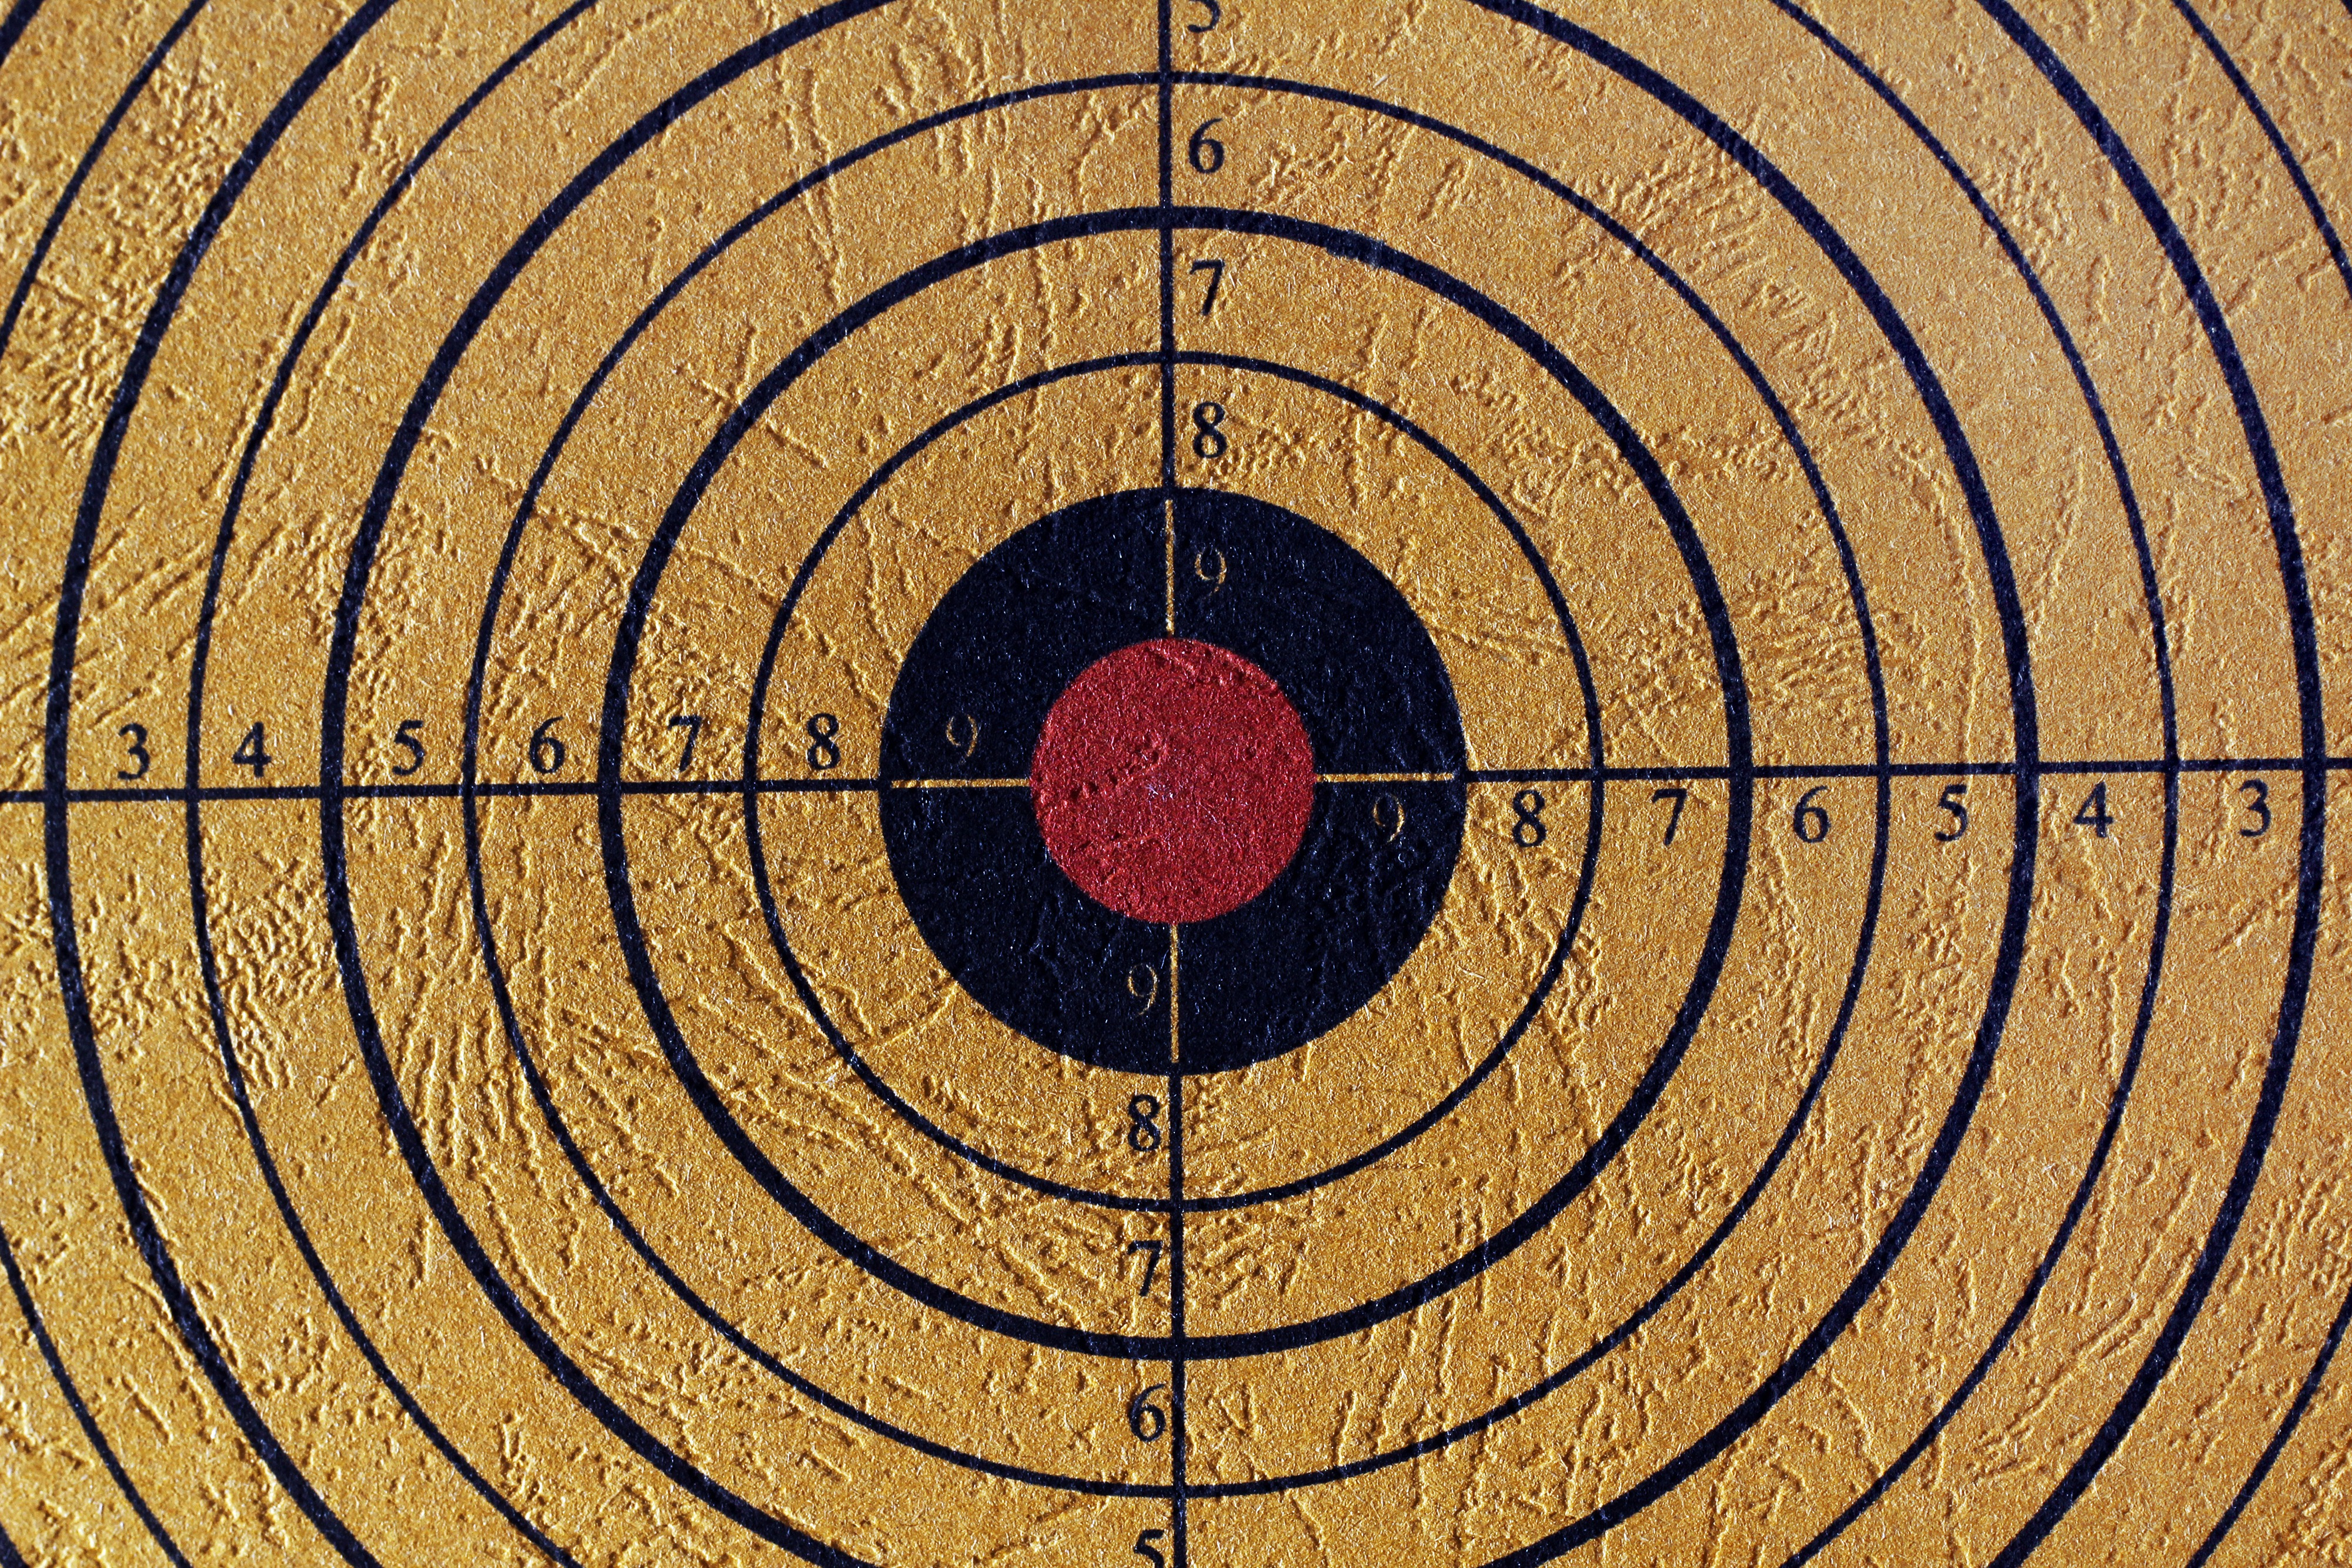 Bullseye Target for Accurate Shooting